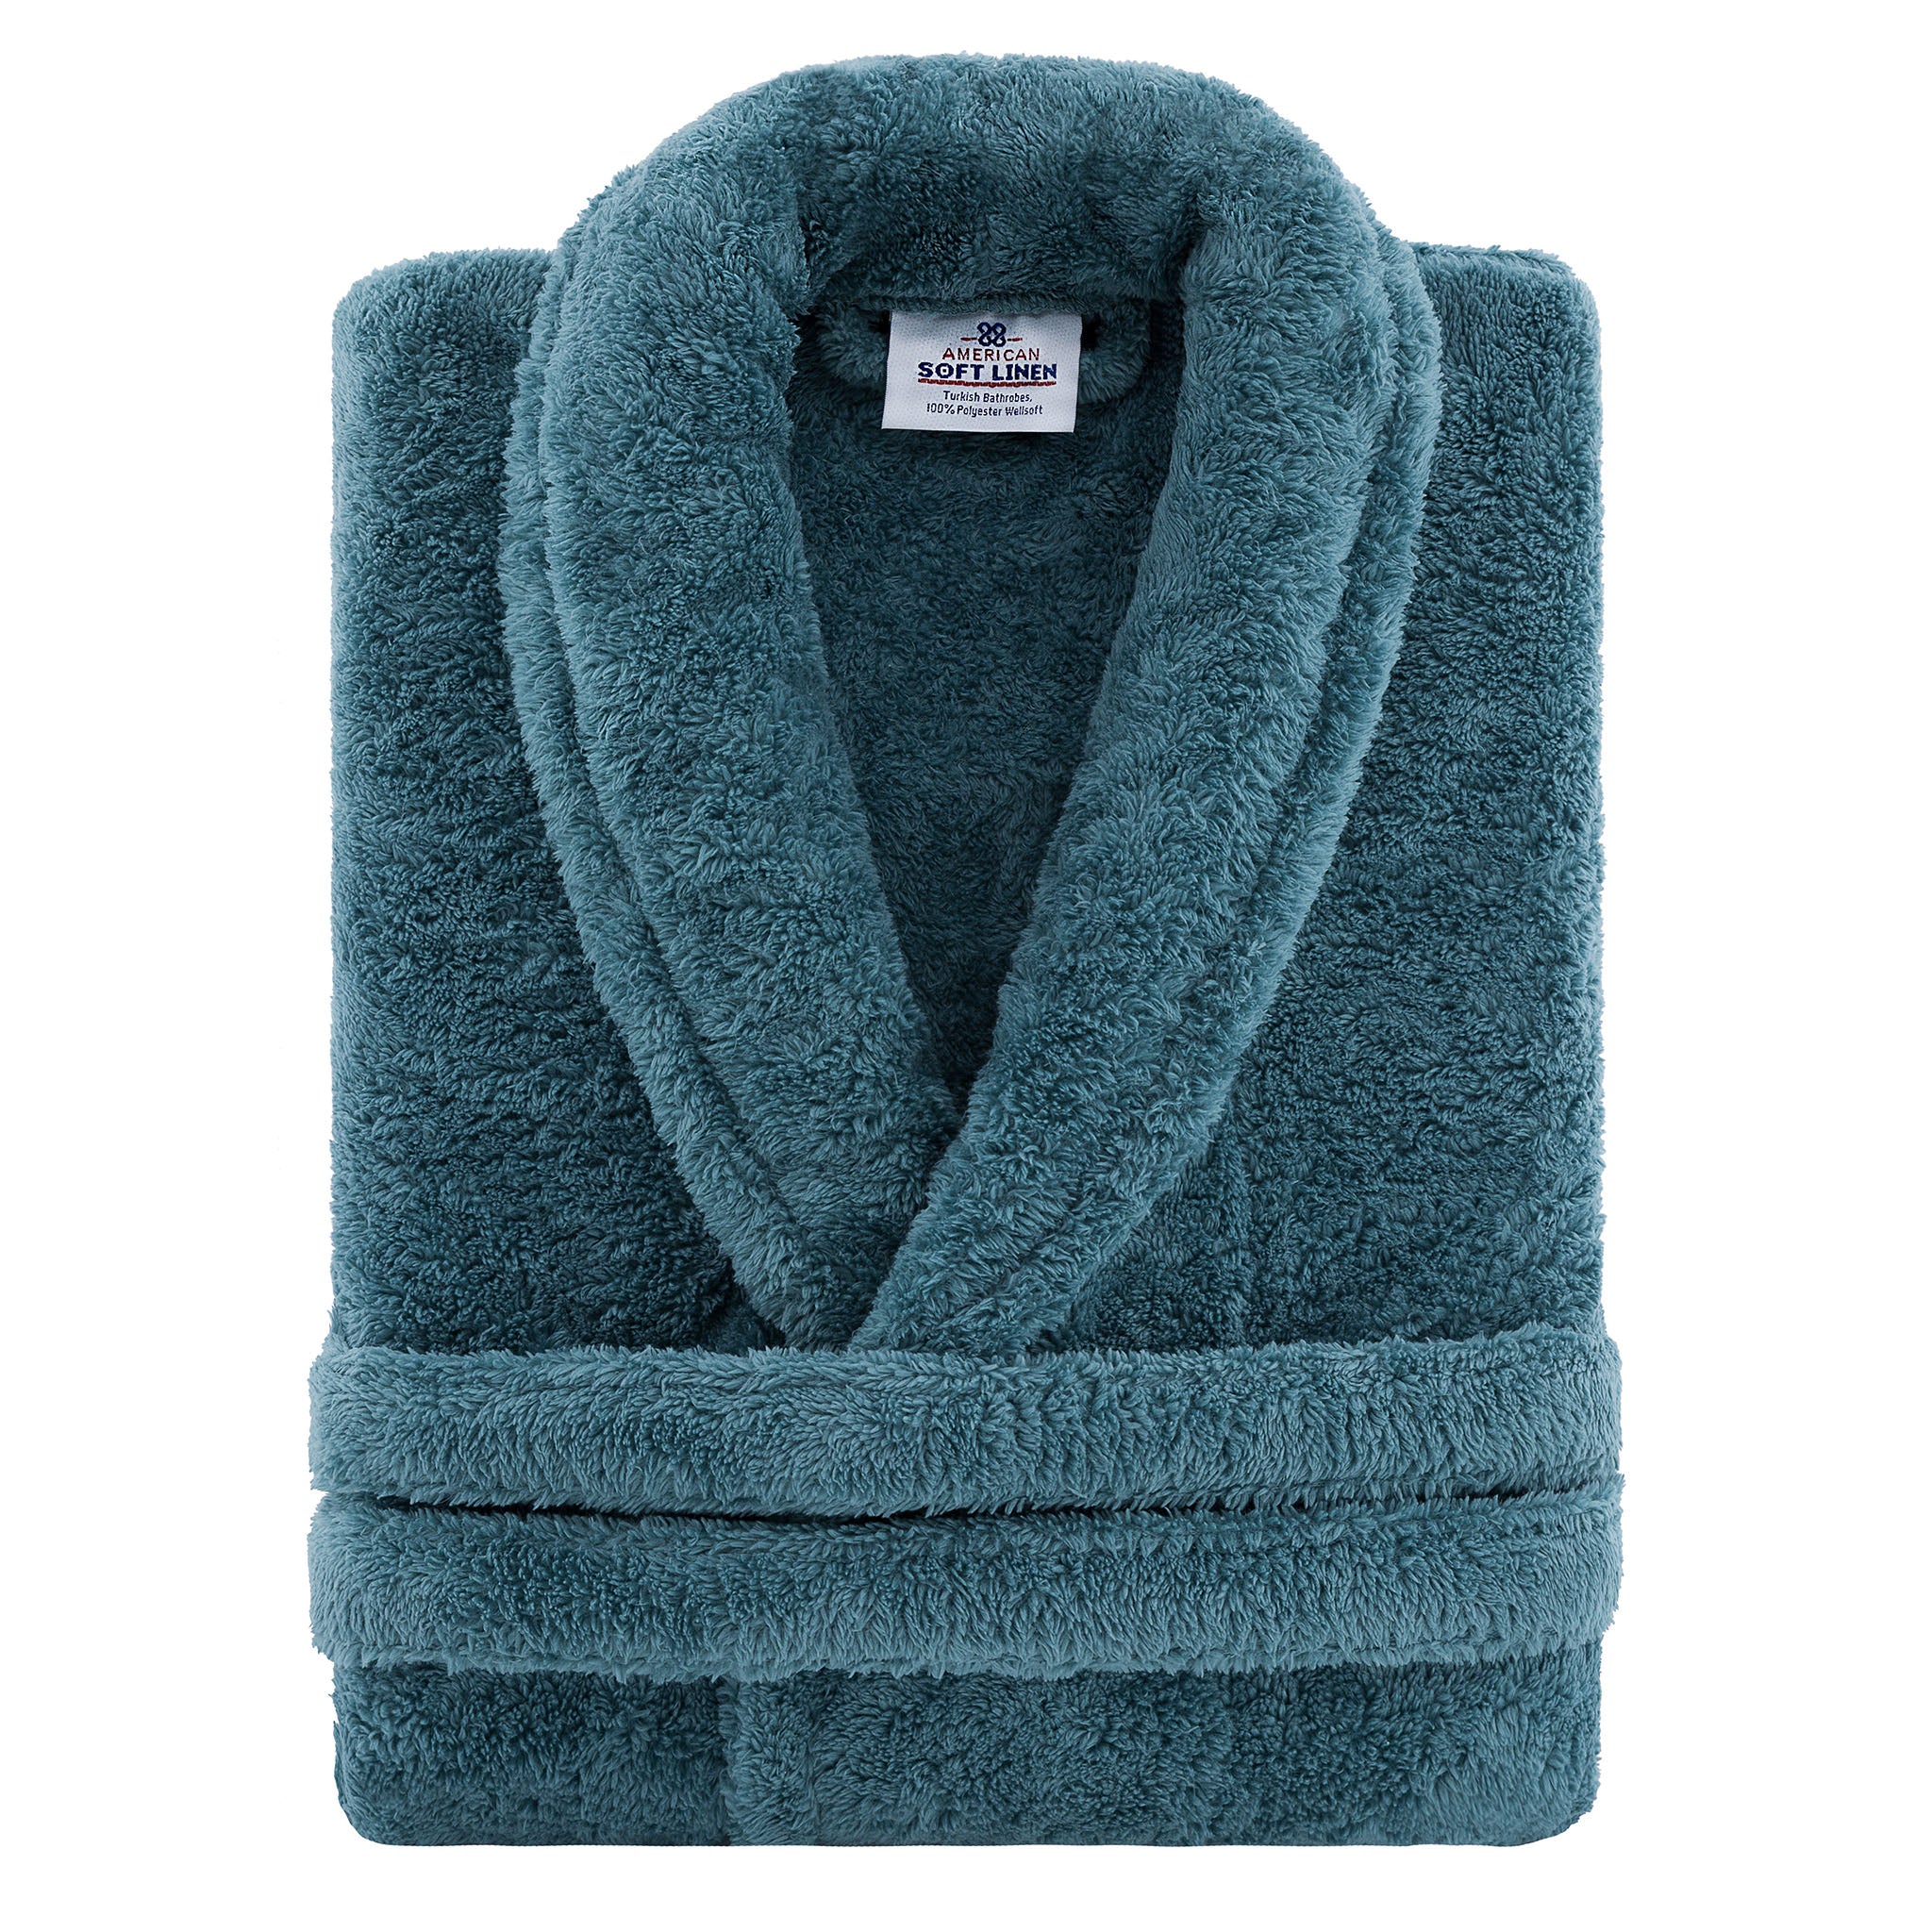 American Soft Linen Super Soft Absorbent and Fluffy Unisex Fleece Bathrobe -12 Set Case Pack -M-L-colonial-blue-3